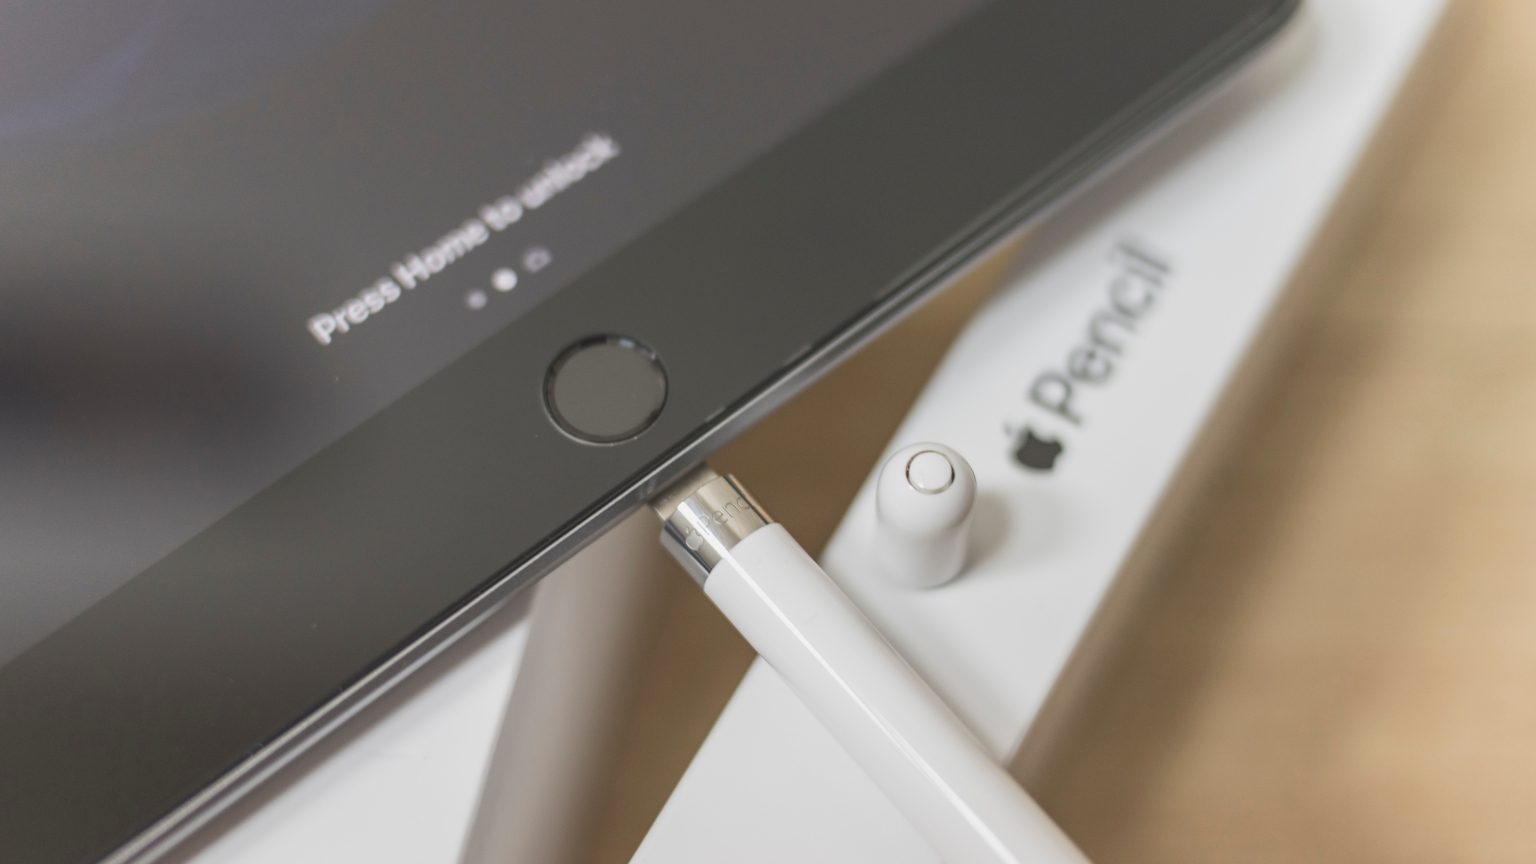 Apple pencil 1 charging, plugged into iPad